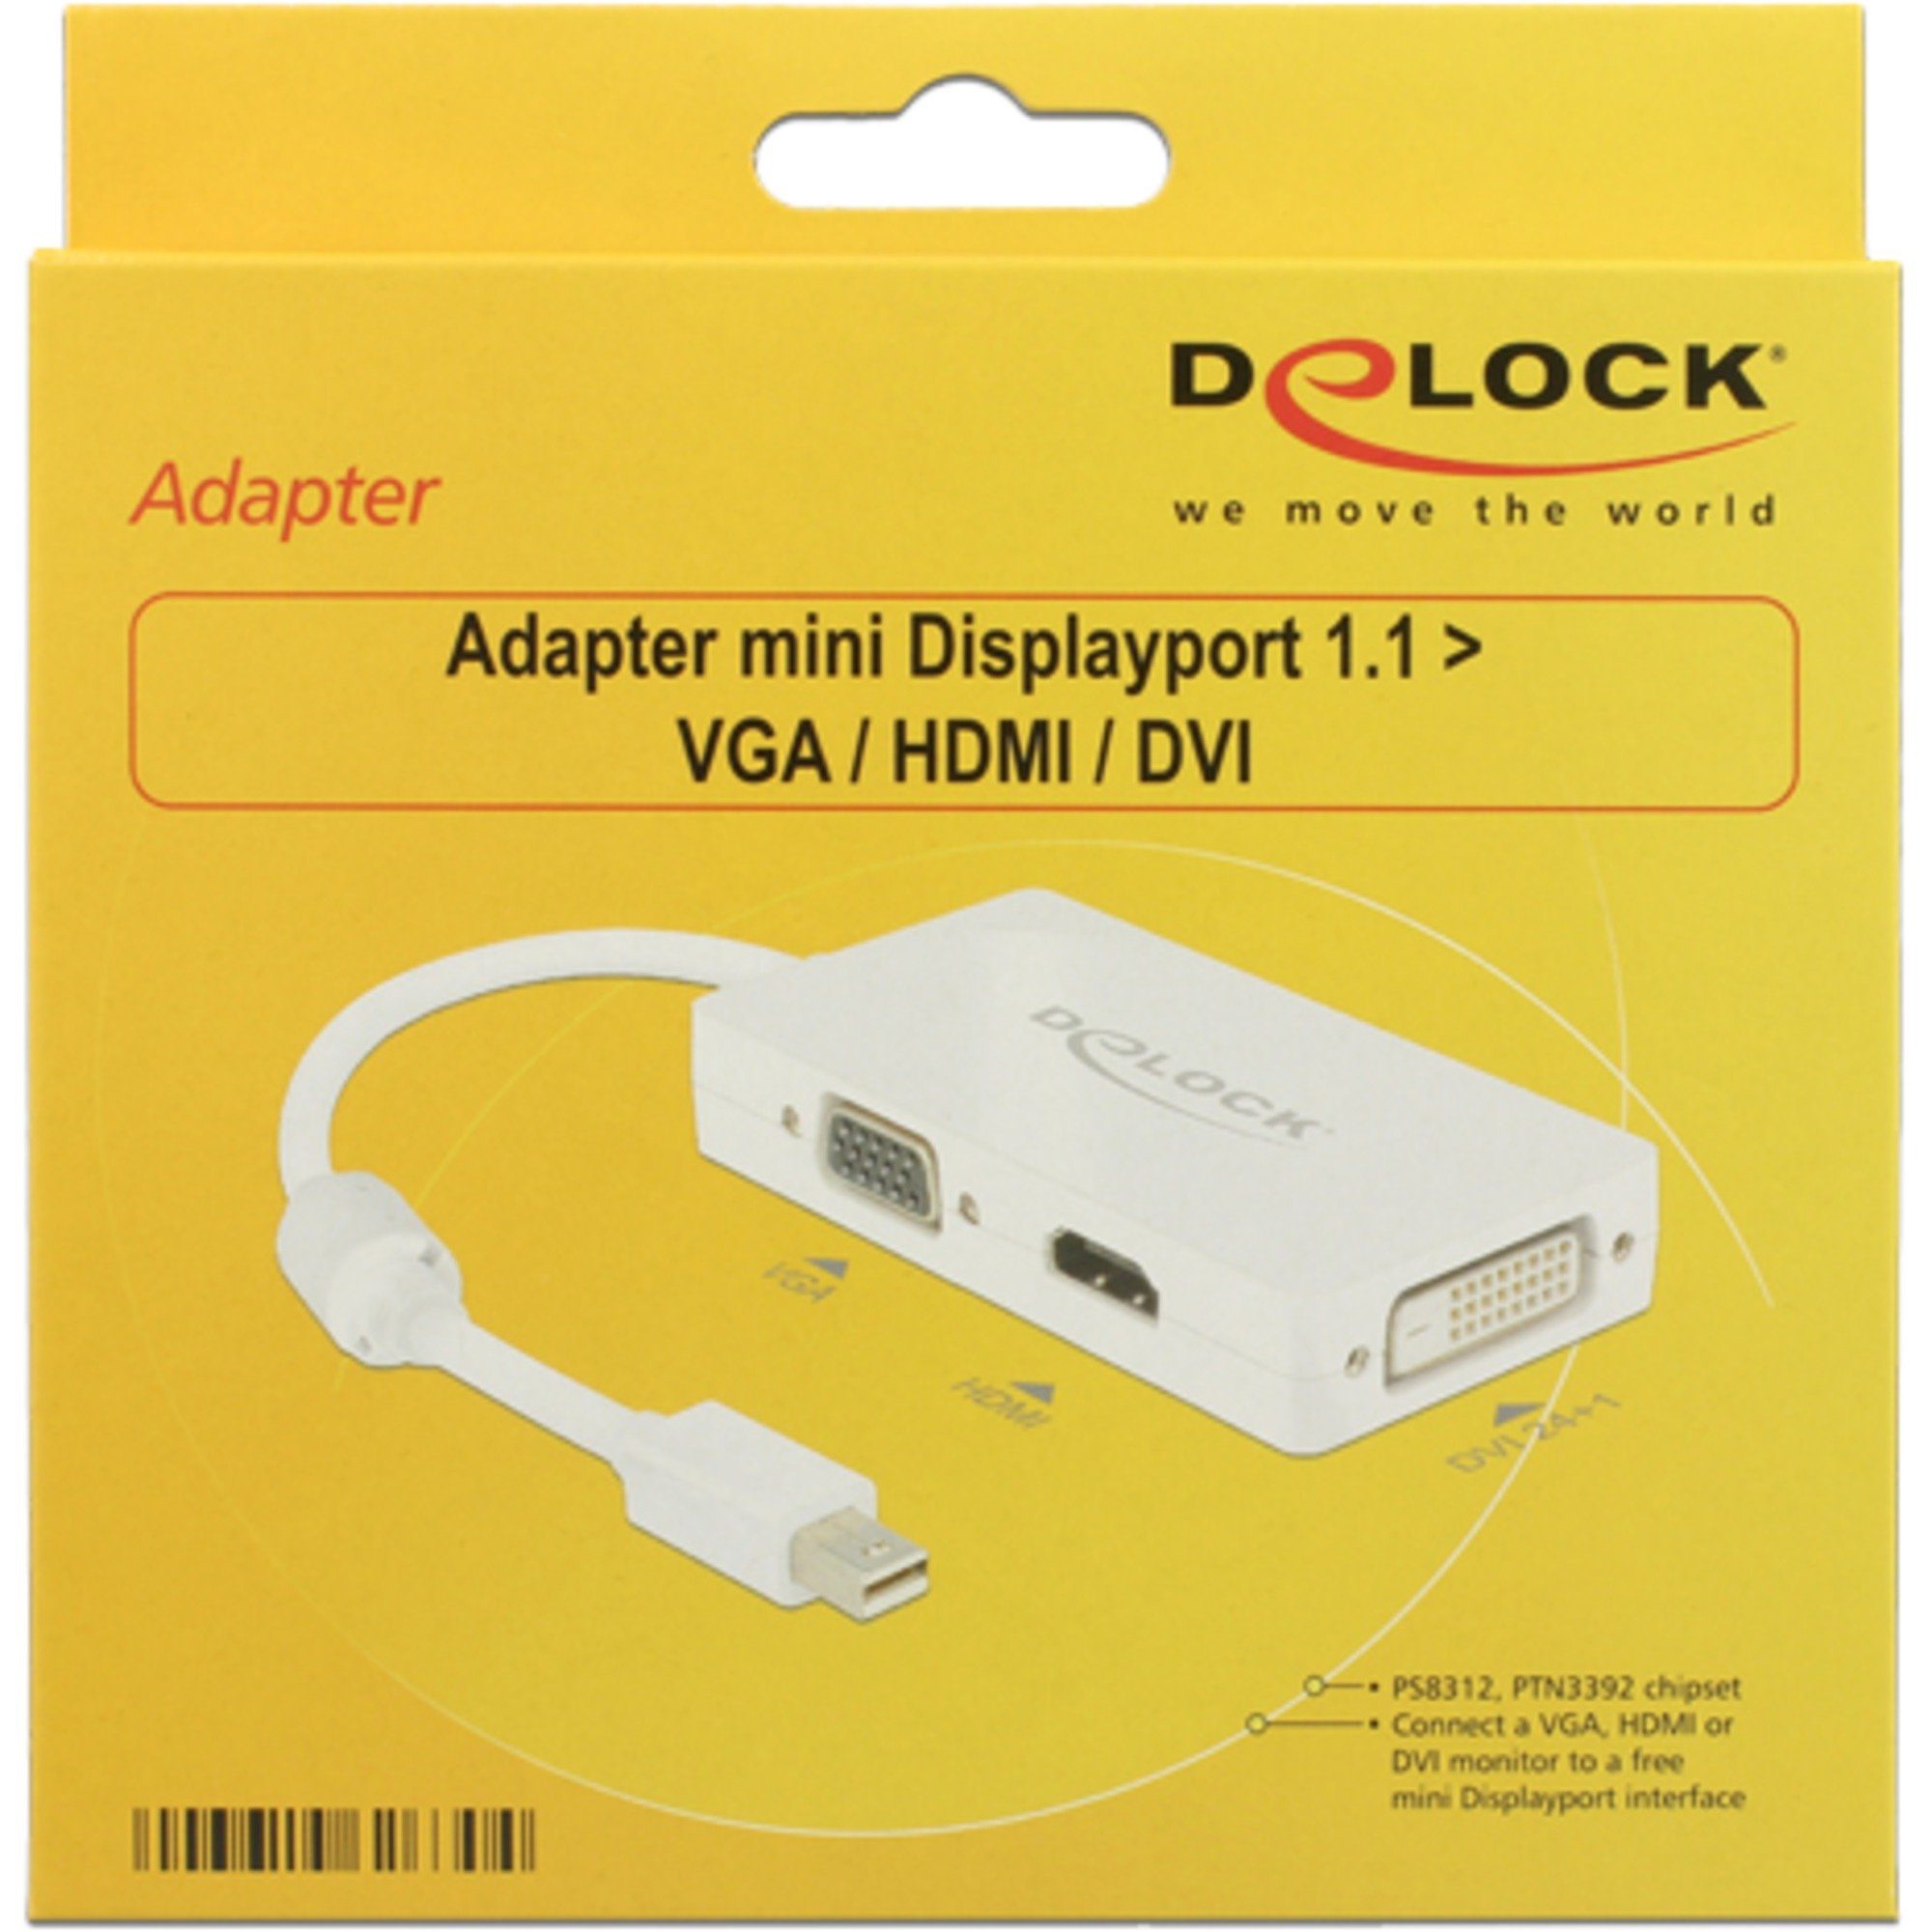 Delock DeLOCK Adapter MiniDisplayport > VGA/HDMI/DVI, (16 Audio- & Video-Adapter